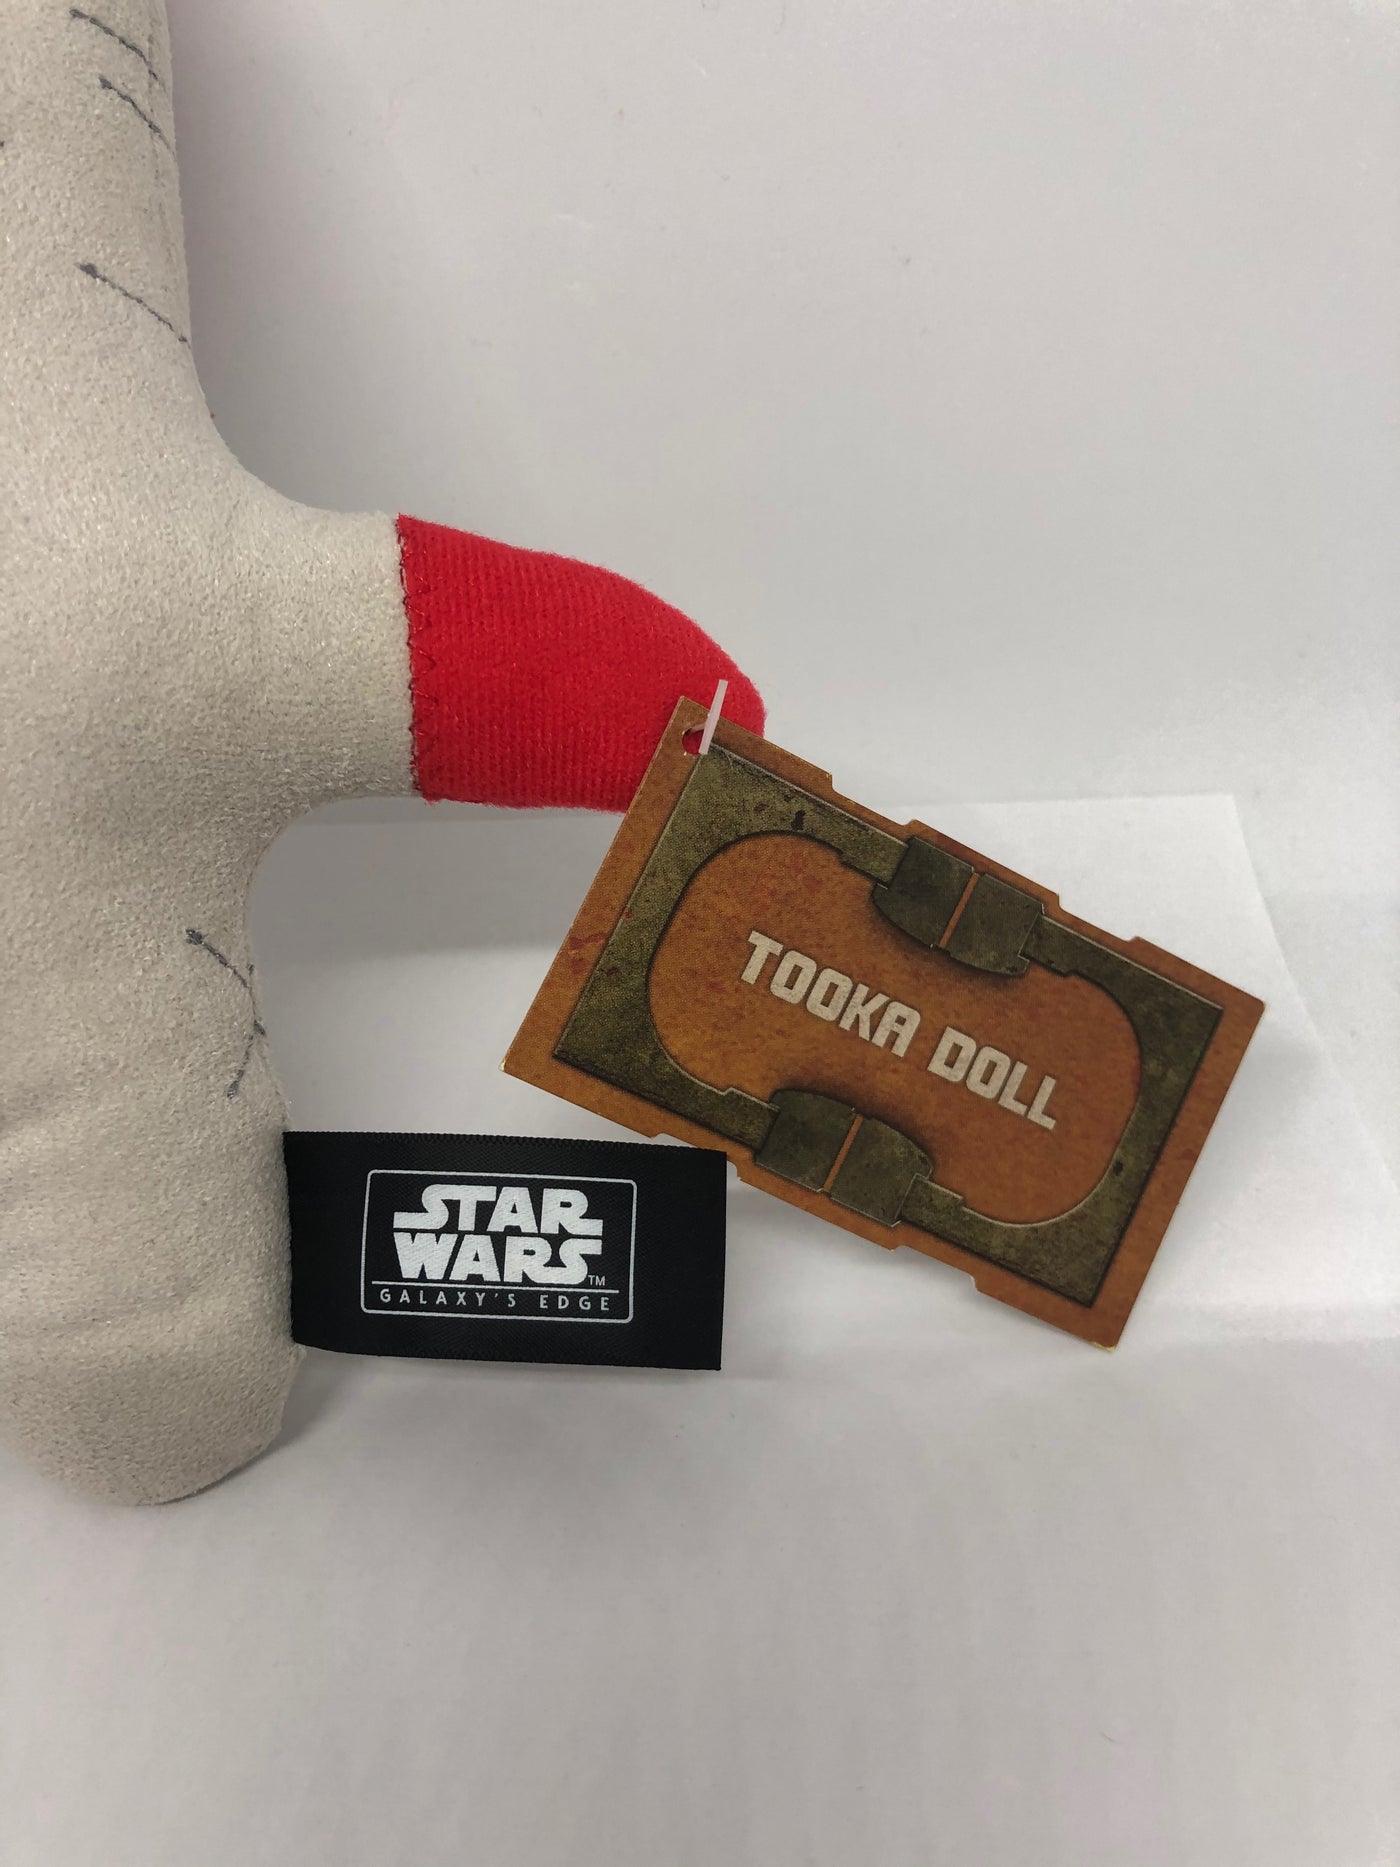 Disney Parks Star Wars Galaxy's Edge Tooka Doll Plush New with Tag